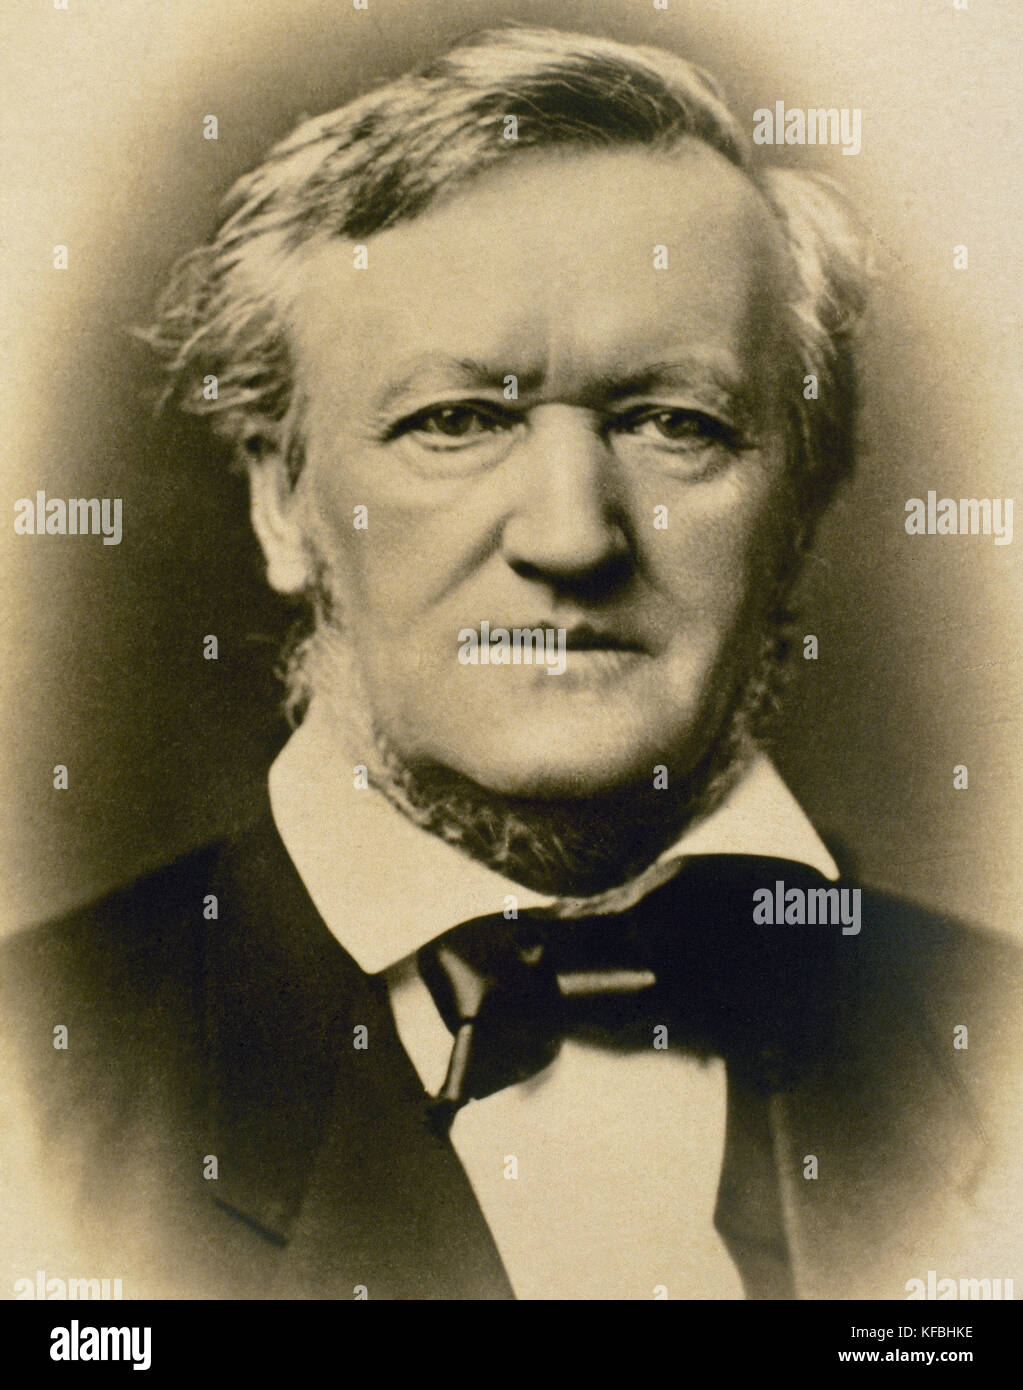 Richard Wagner (1813-1883), deutscher Komponist. Portrait. fotografie. Stockfoto